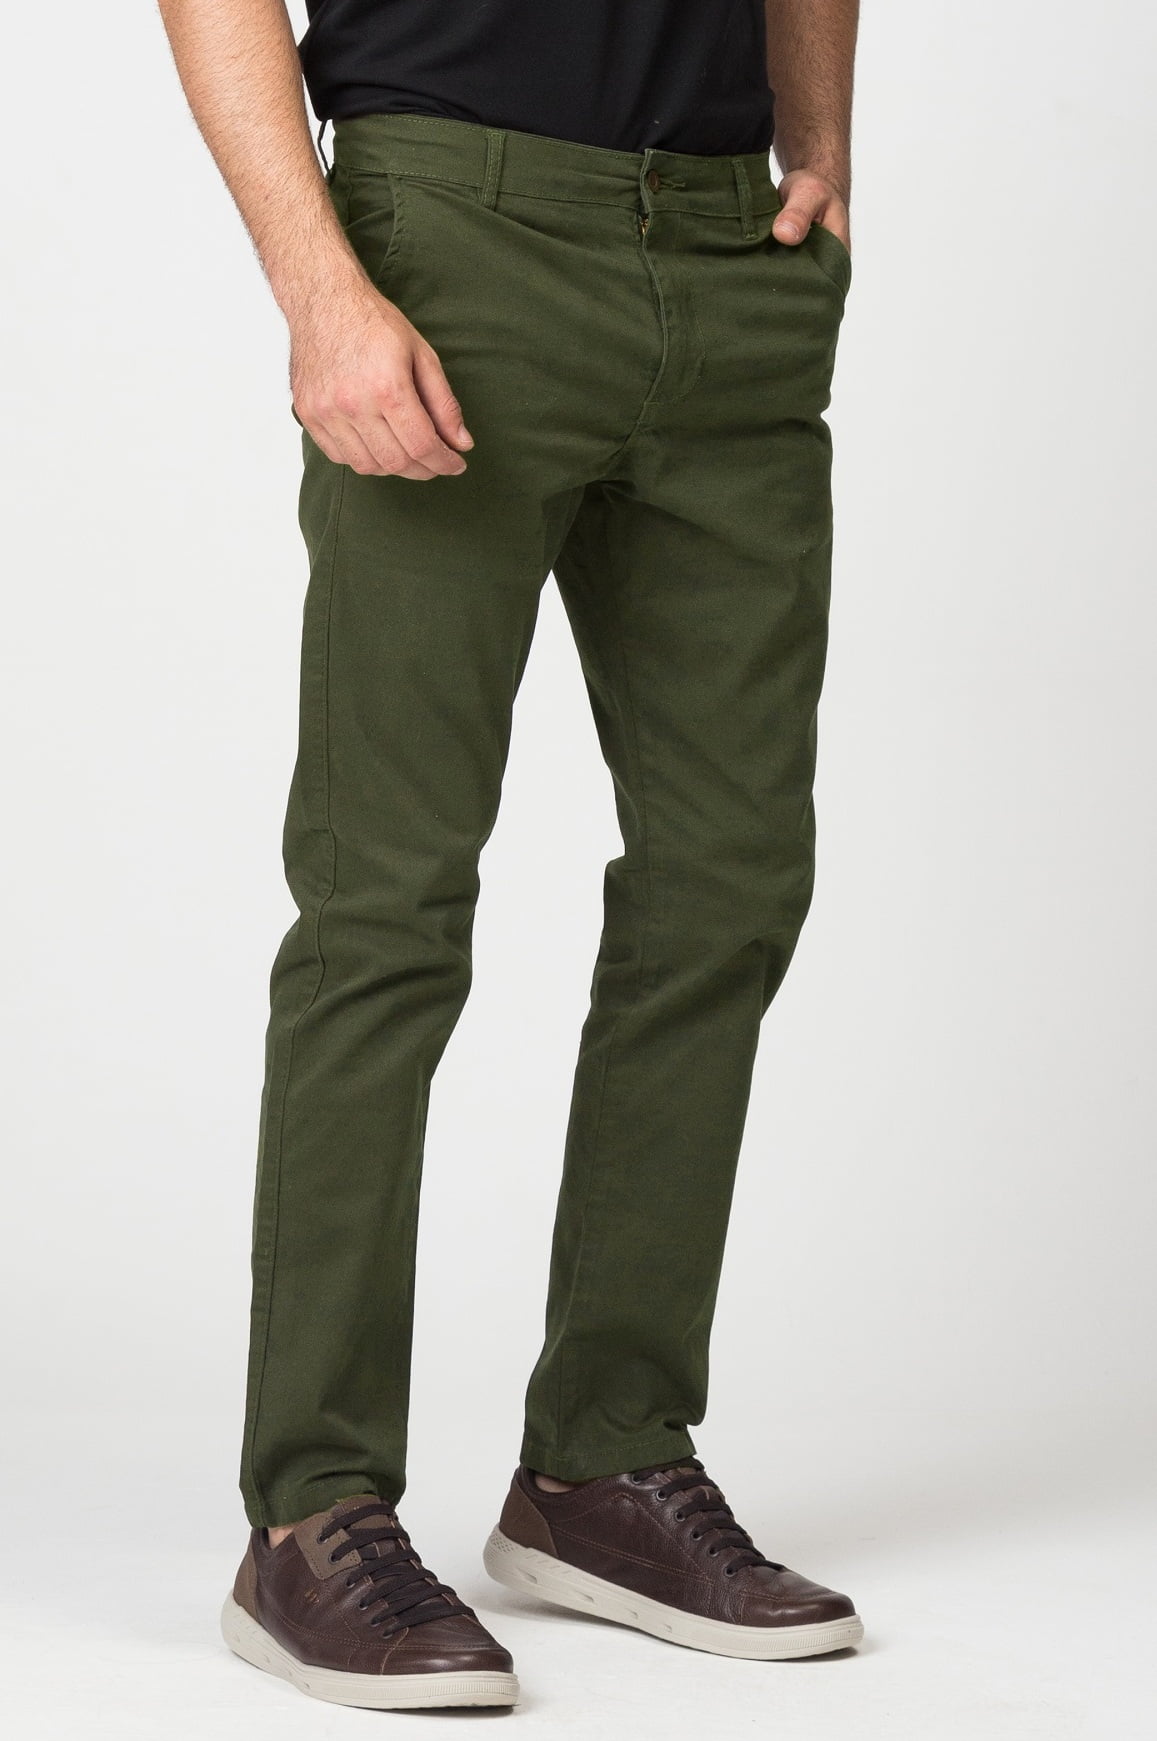 Calça Sarja Masculina Verde Militar M1453